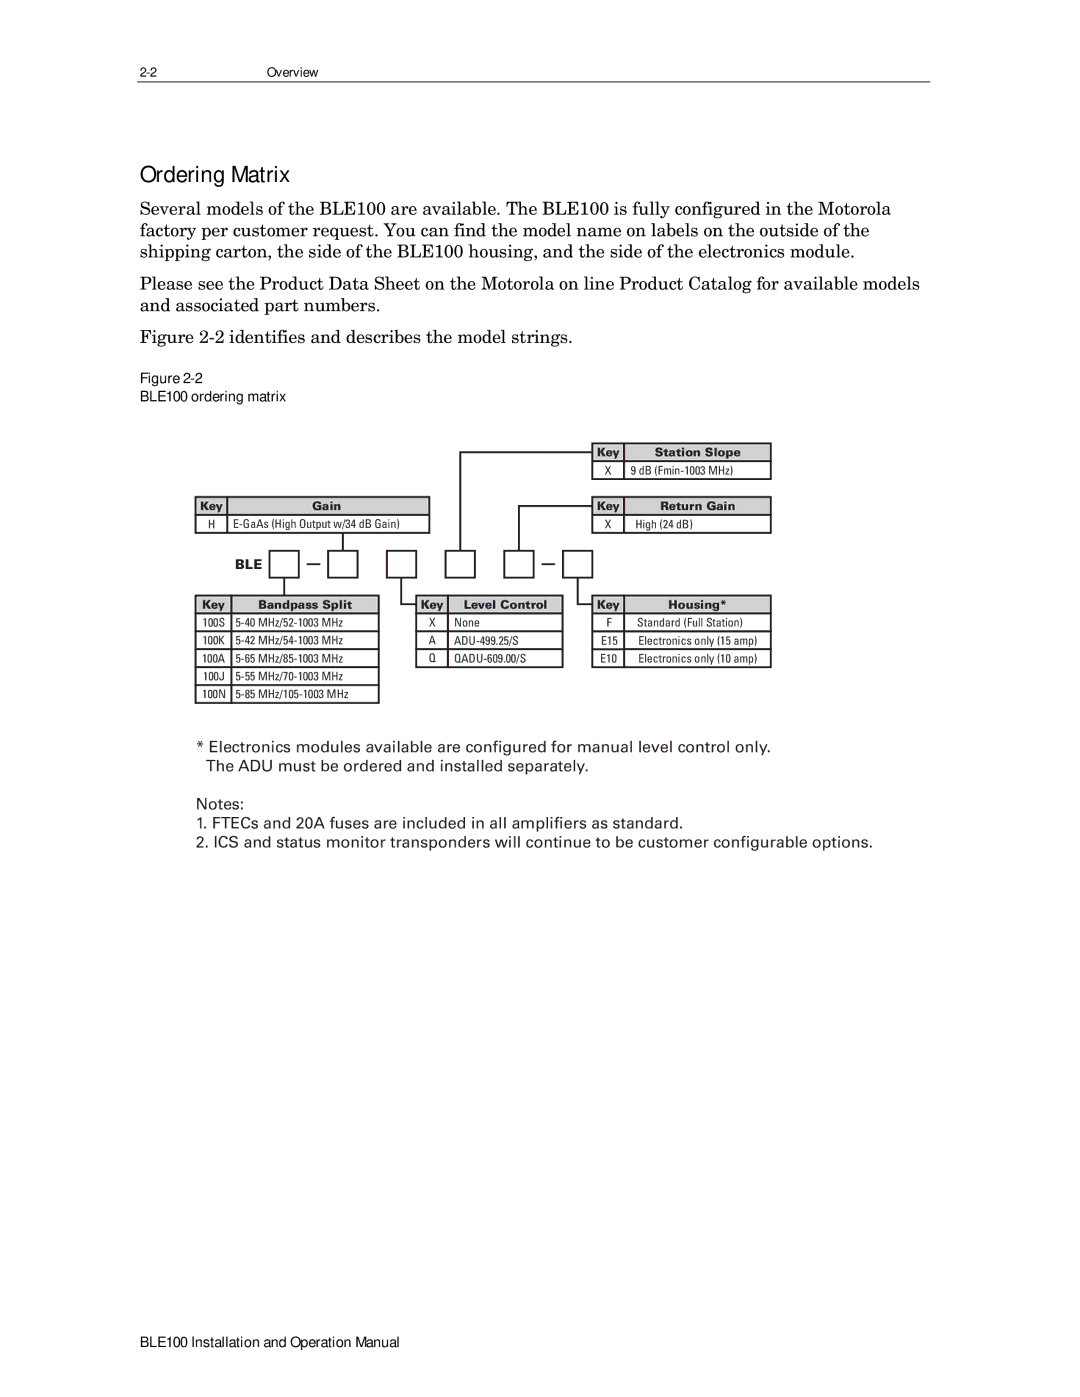 Motorola operation manual Ordering Matrix, BLE100 ordering matrix 